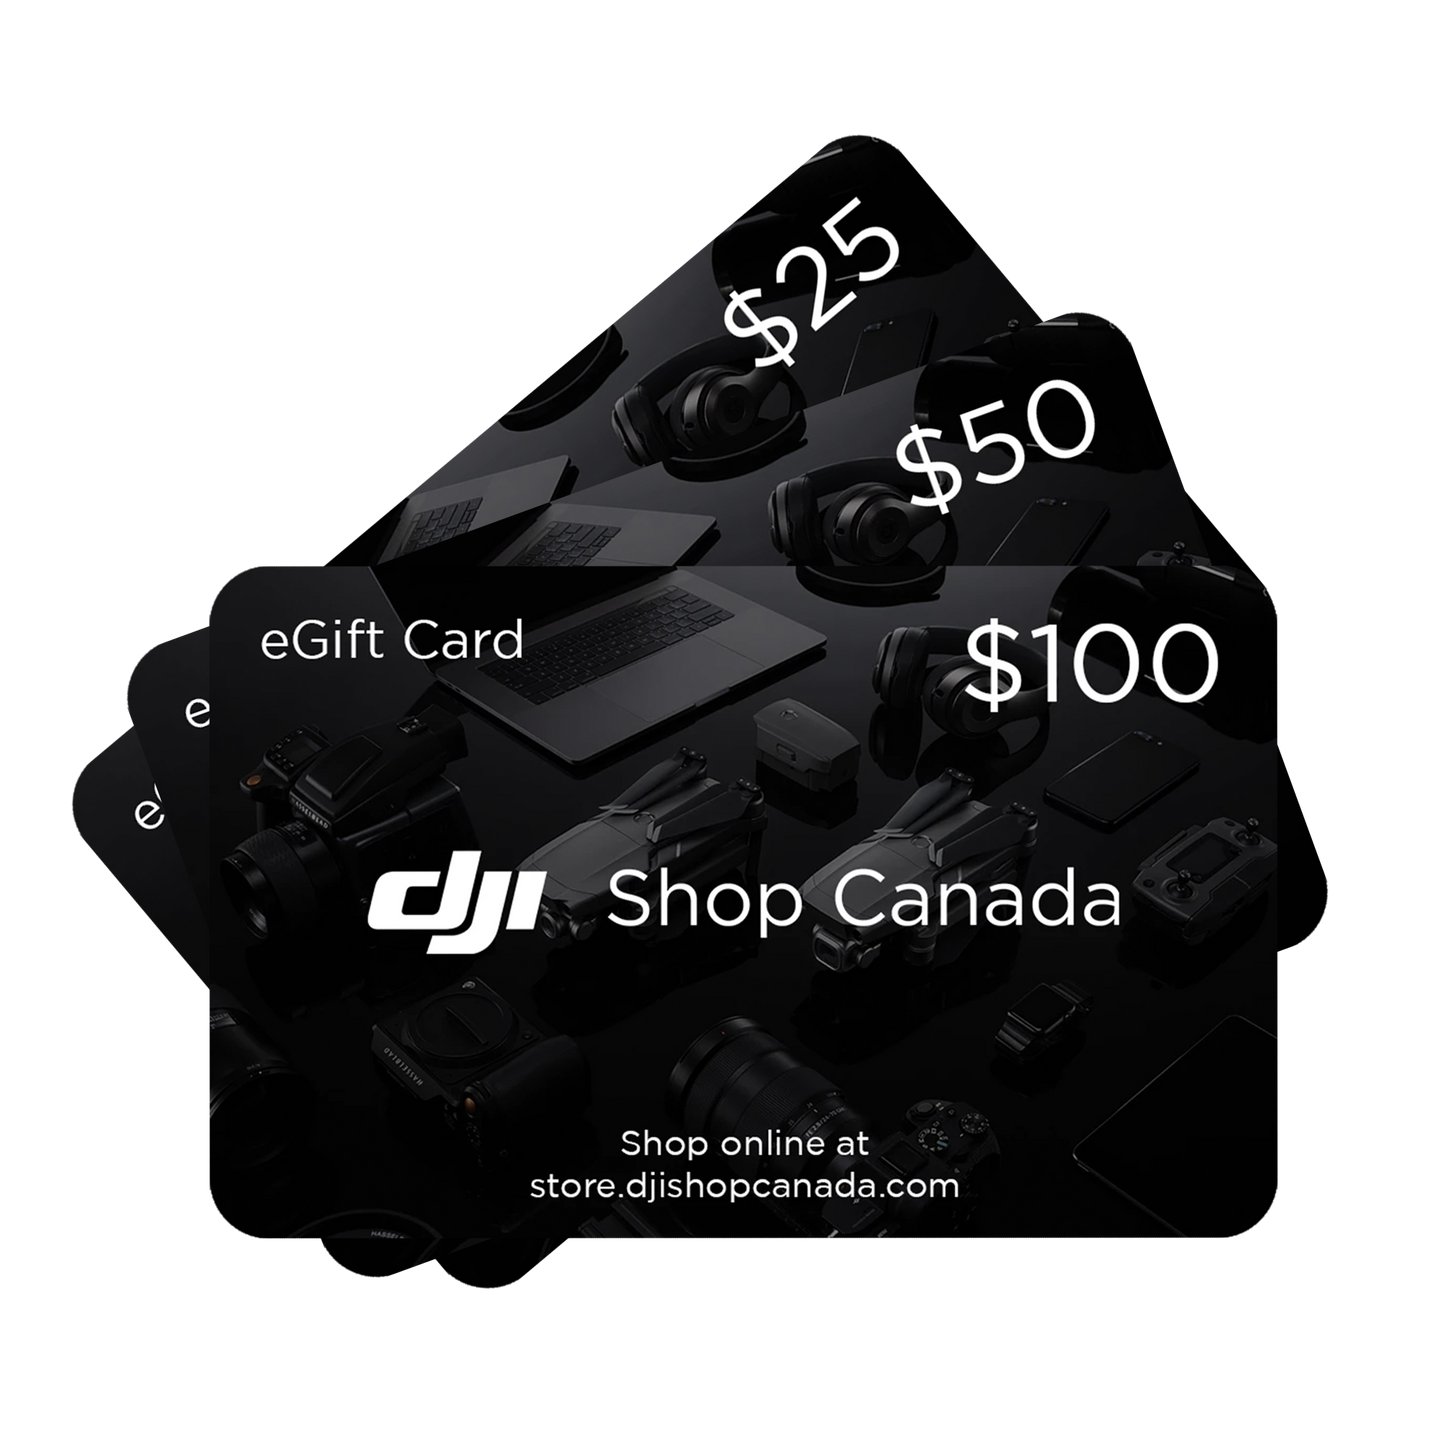 DJI Shop Canada eGift Card